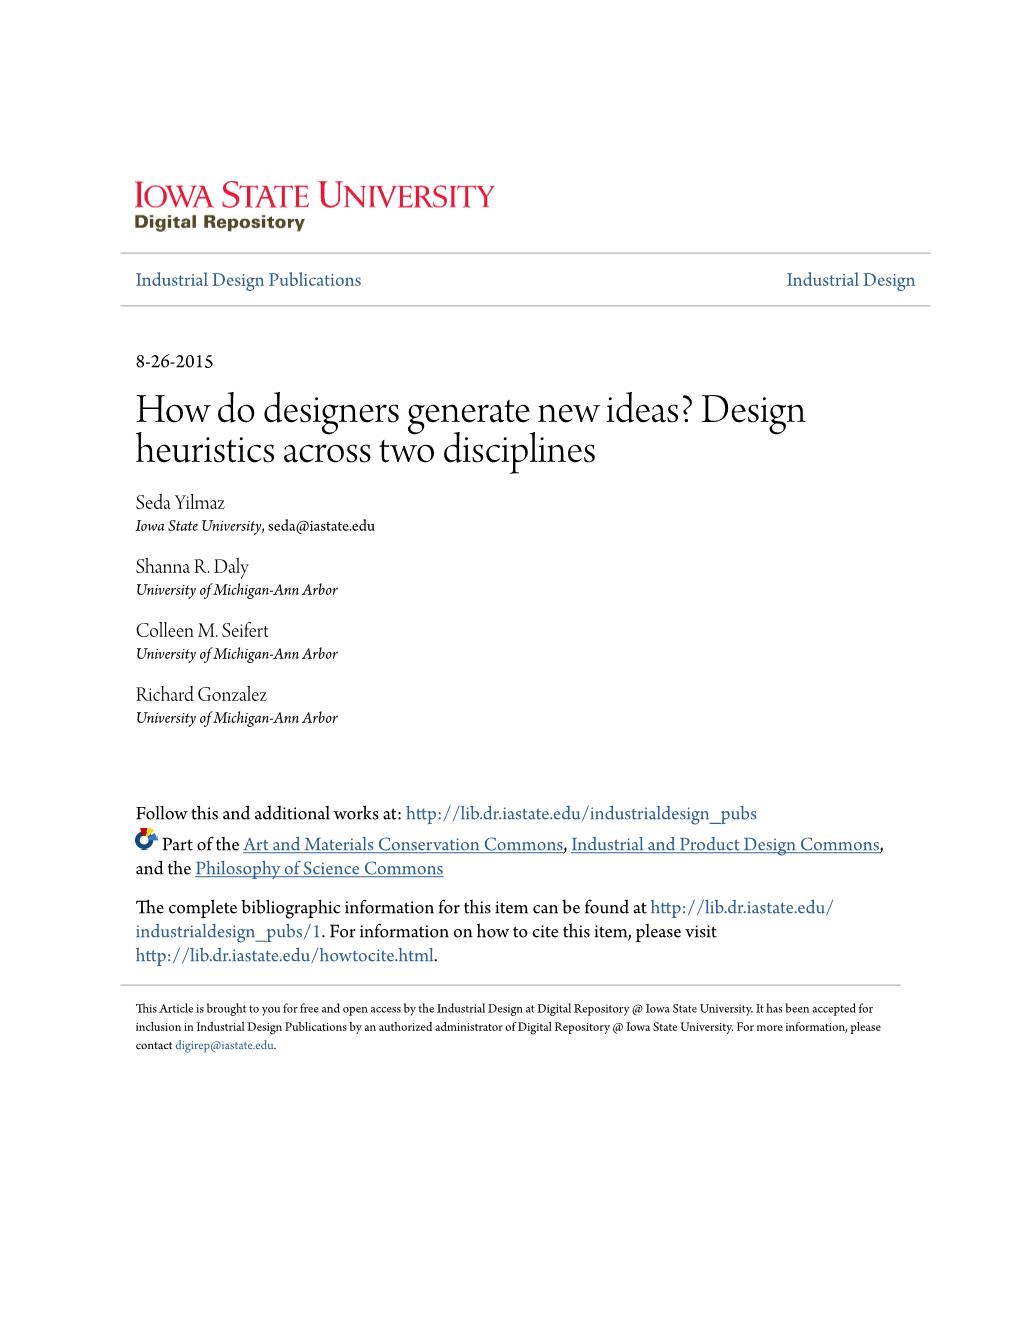 How Do Designers Generate New Ideas? Design Heuristics Across Two Disciplines Seda Yilmaz Iowa State University, Seda@Iastate.Edu